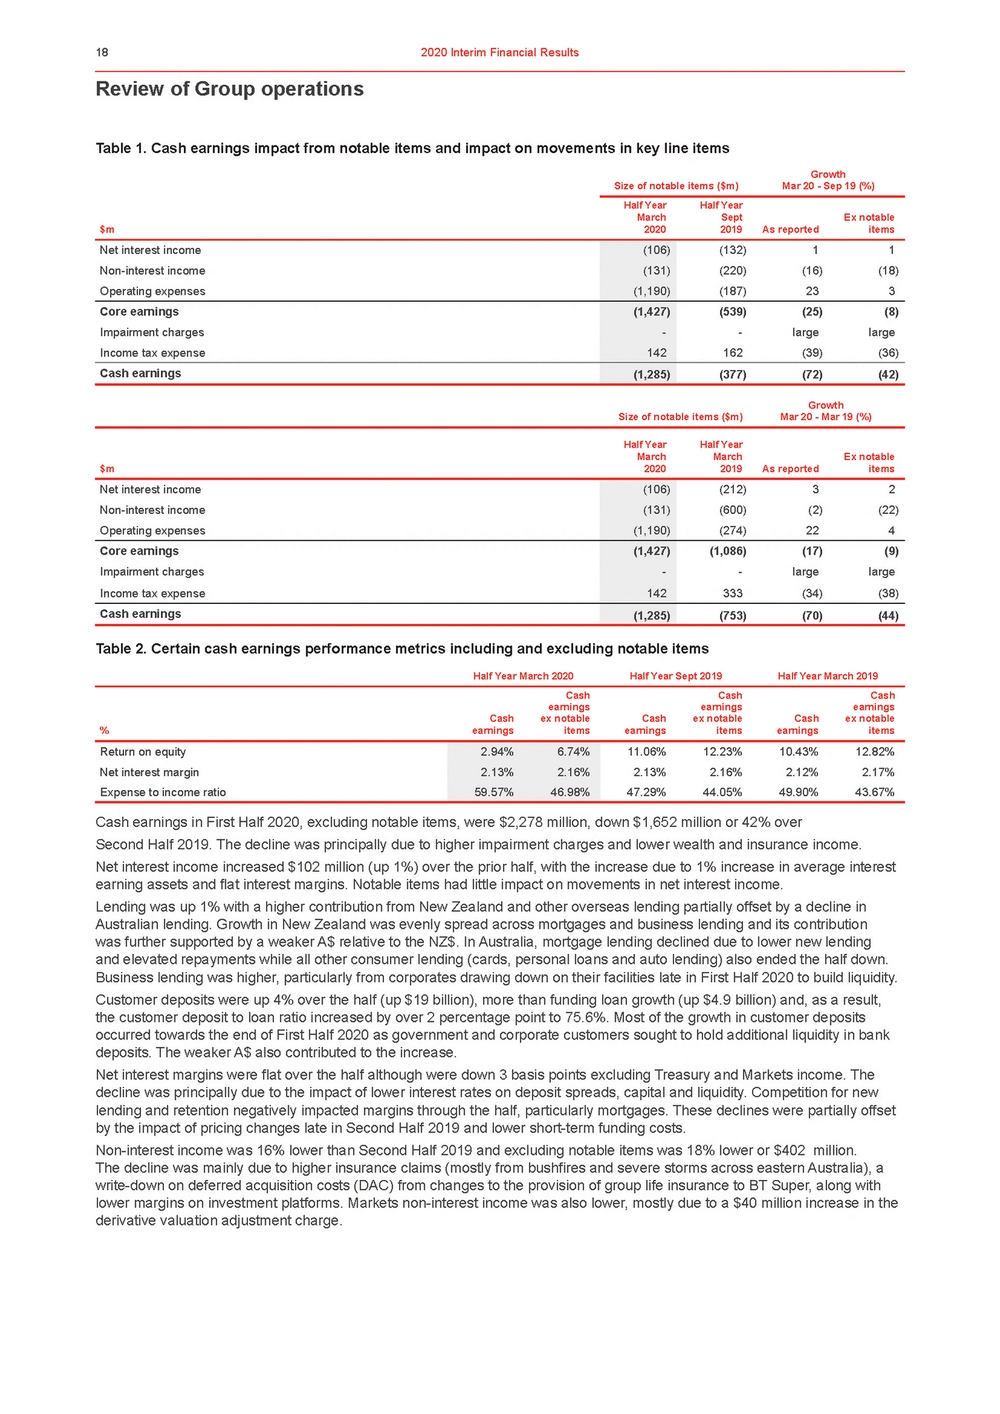 11676-3-ex1_westpac 2020 interim financial results announcement_page_023.jpg